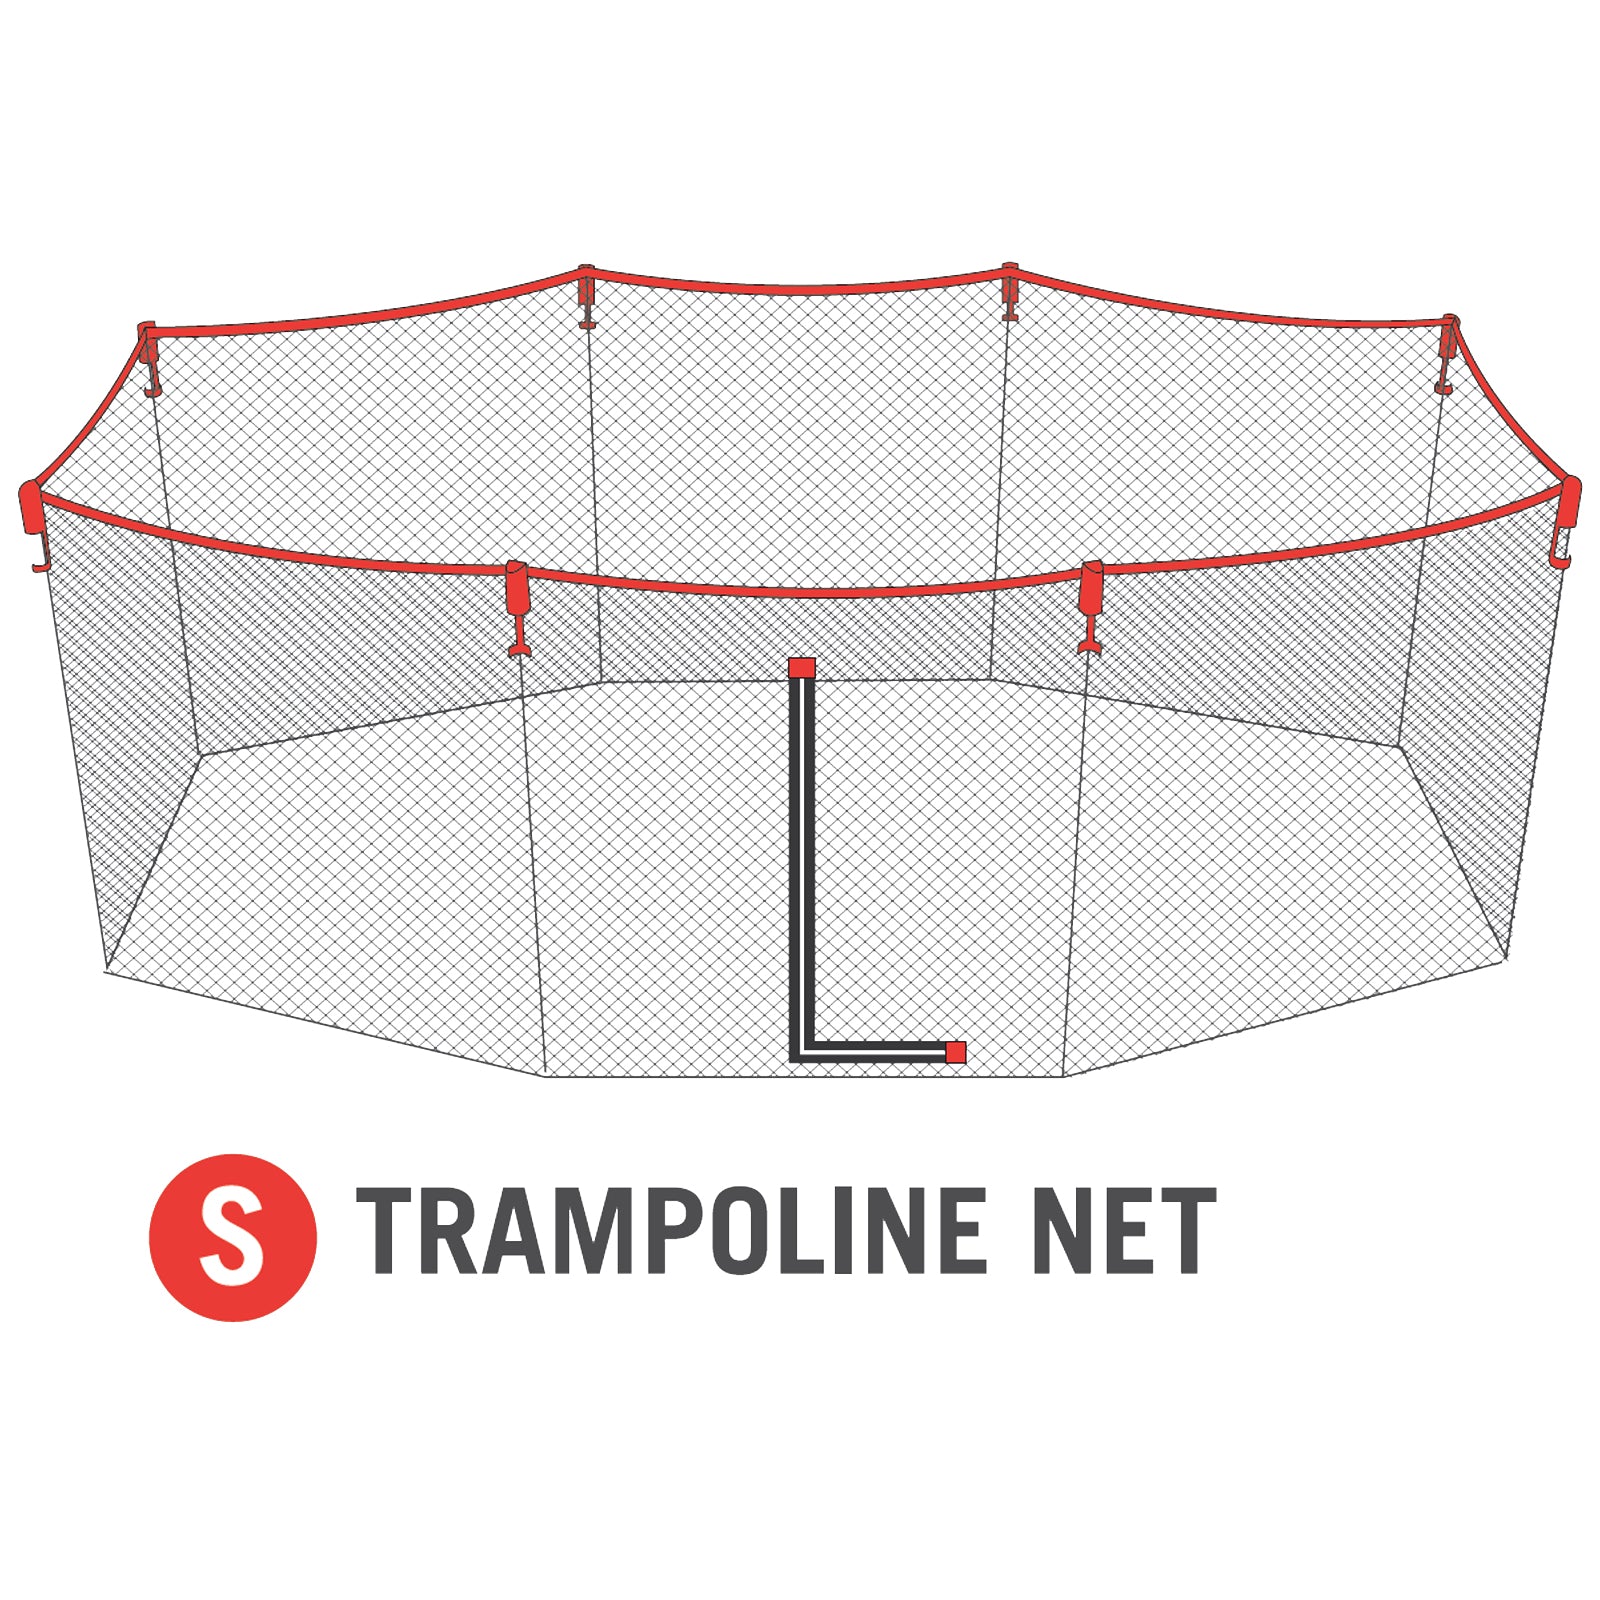 Net for 11x18 foot Horizon Trampoline (Part S).